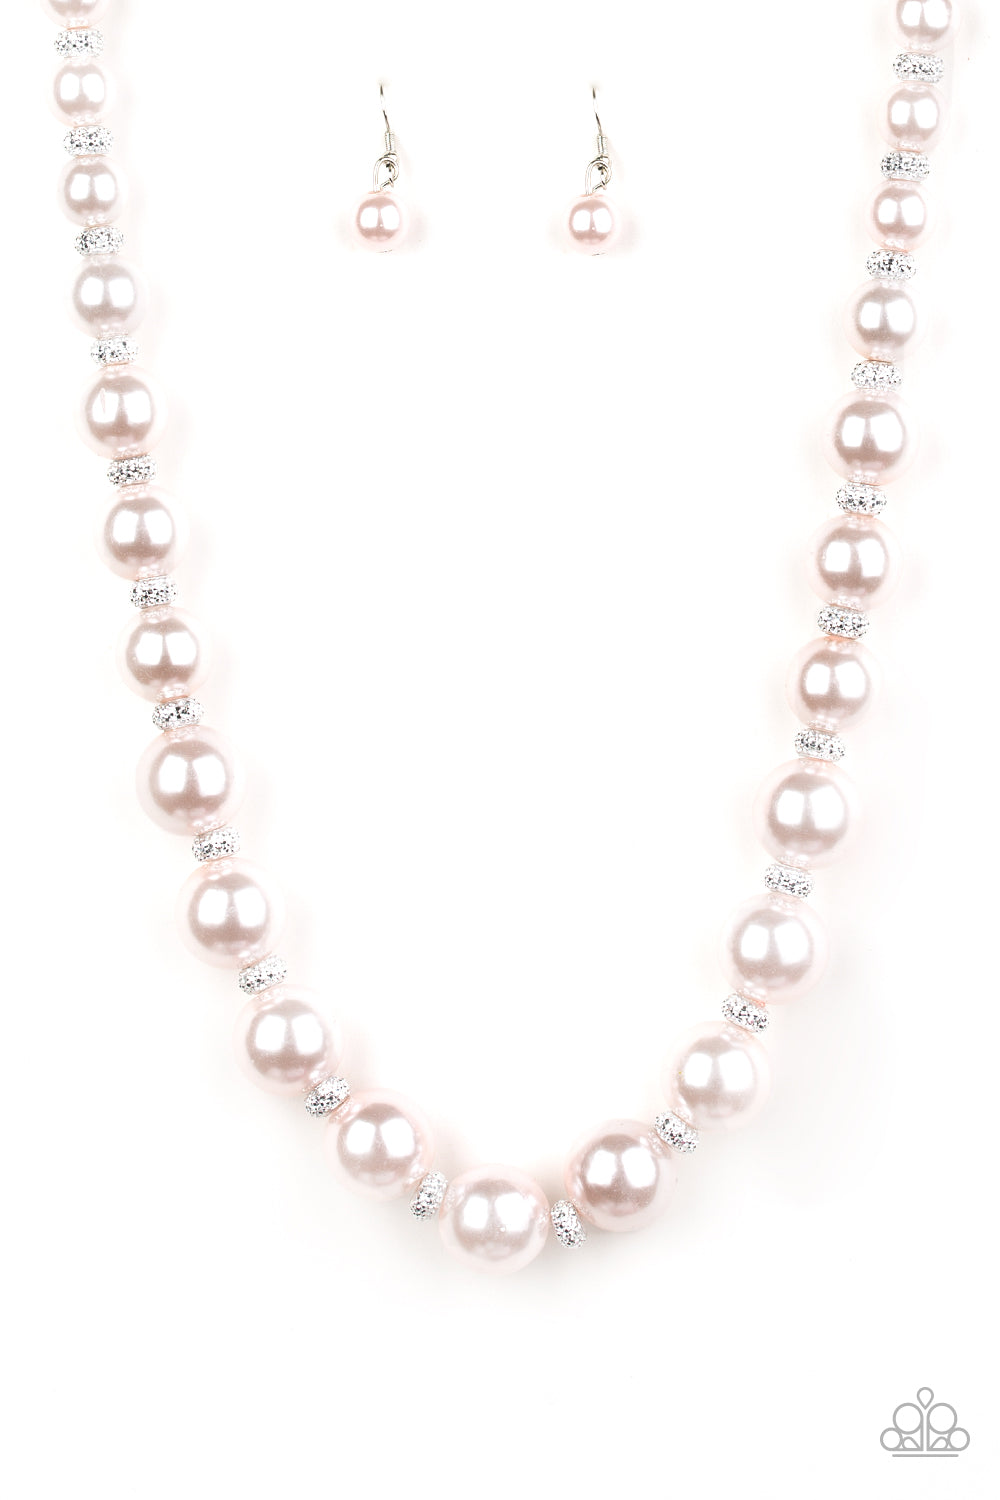 Uptown Heiress Pink Paparazzi Necklaces Cashmere Pink Jewels - Cashmere Pink Jewels & Accessories, Cashmere Pink Jewels & Accessories - Paparazzi